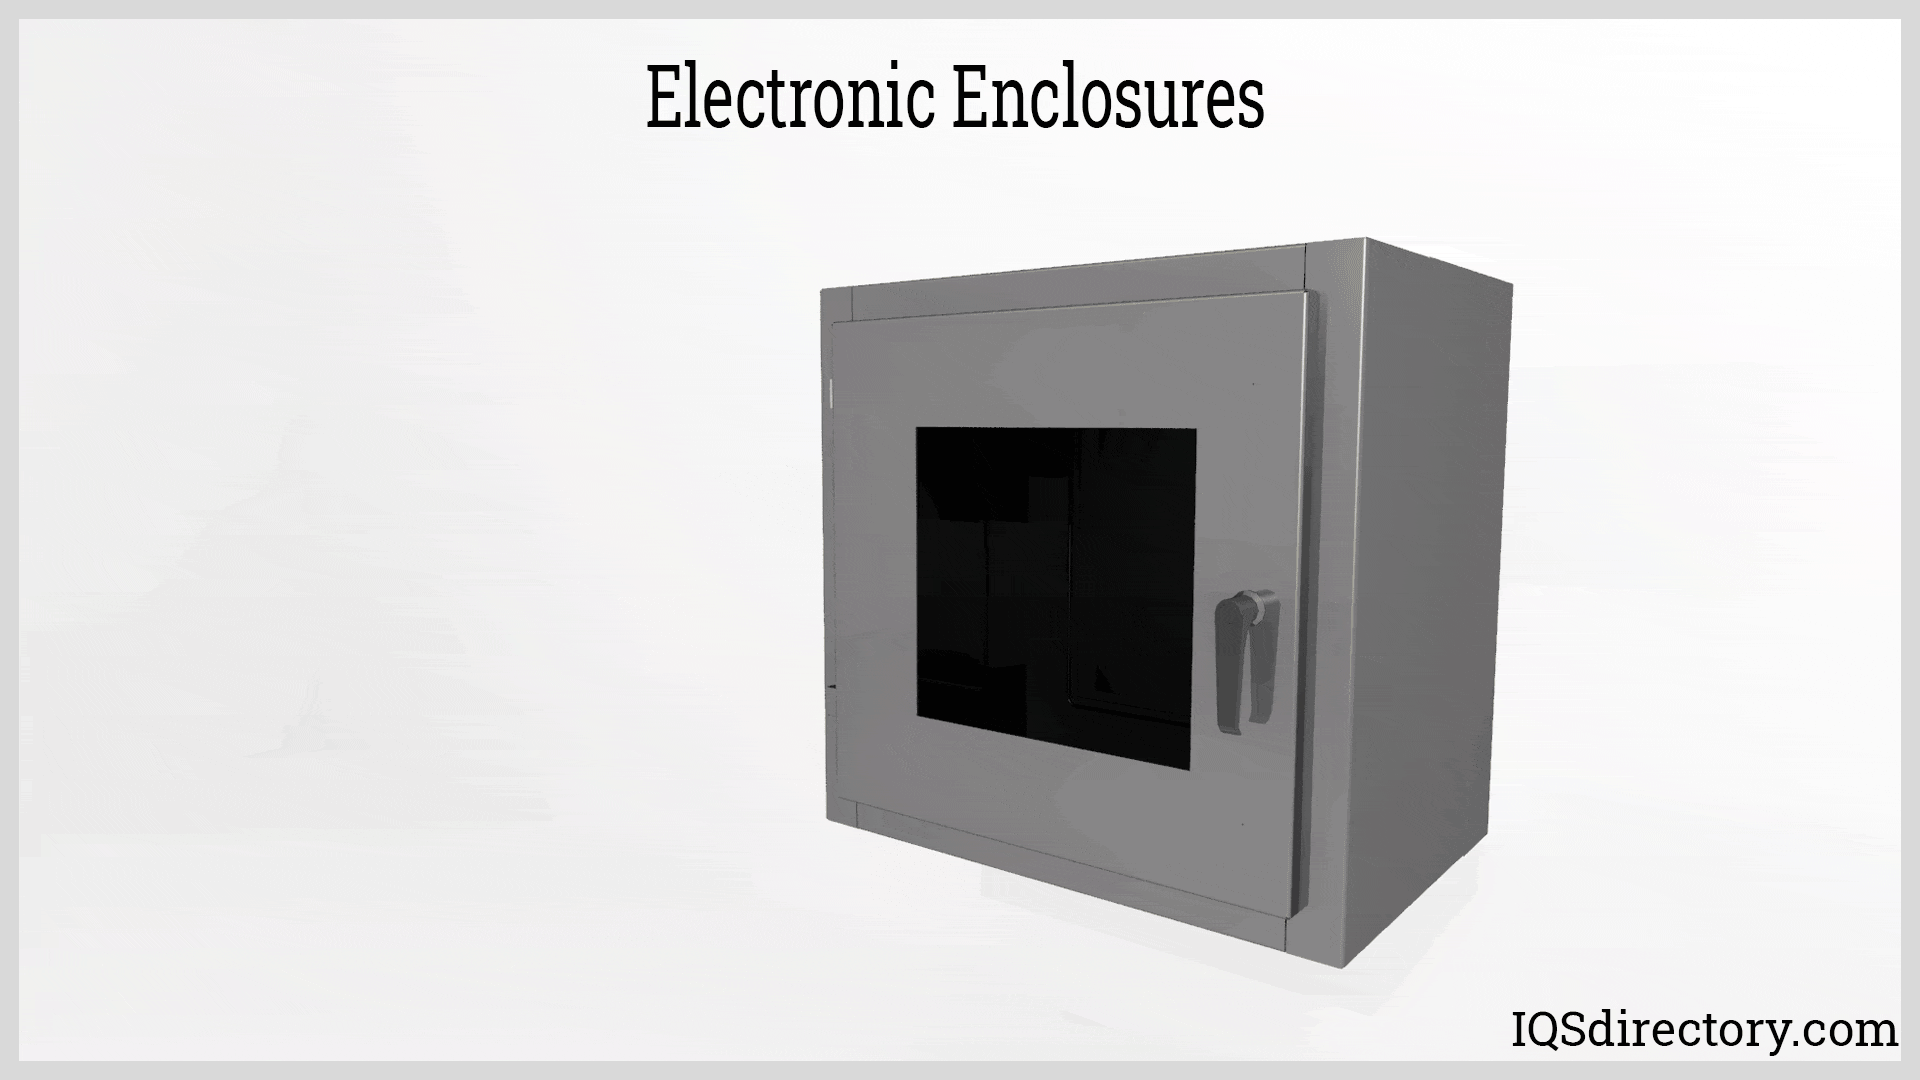 Electronic Enclosures